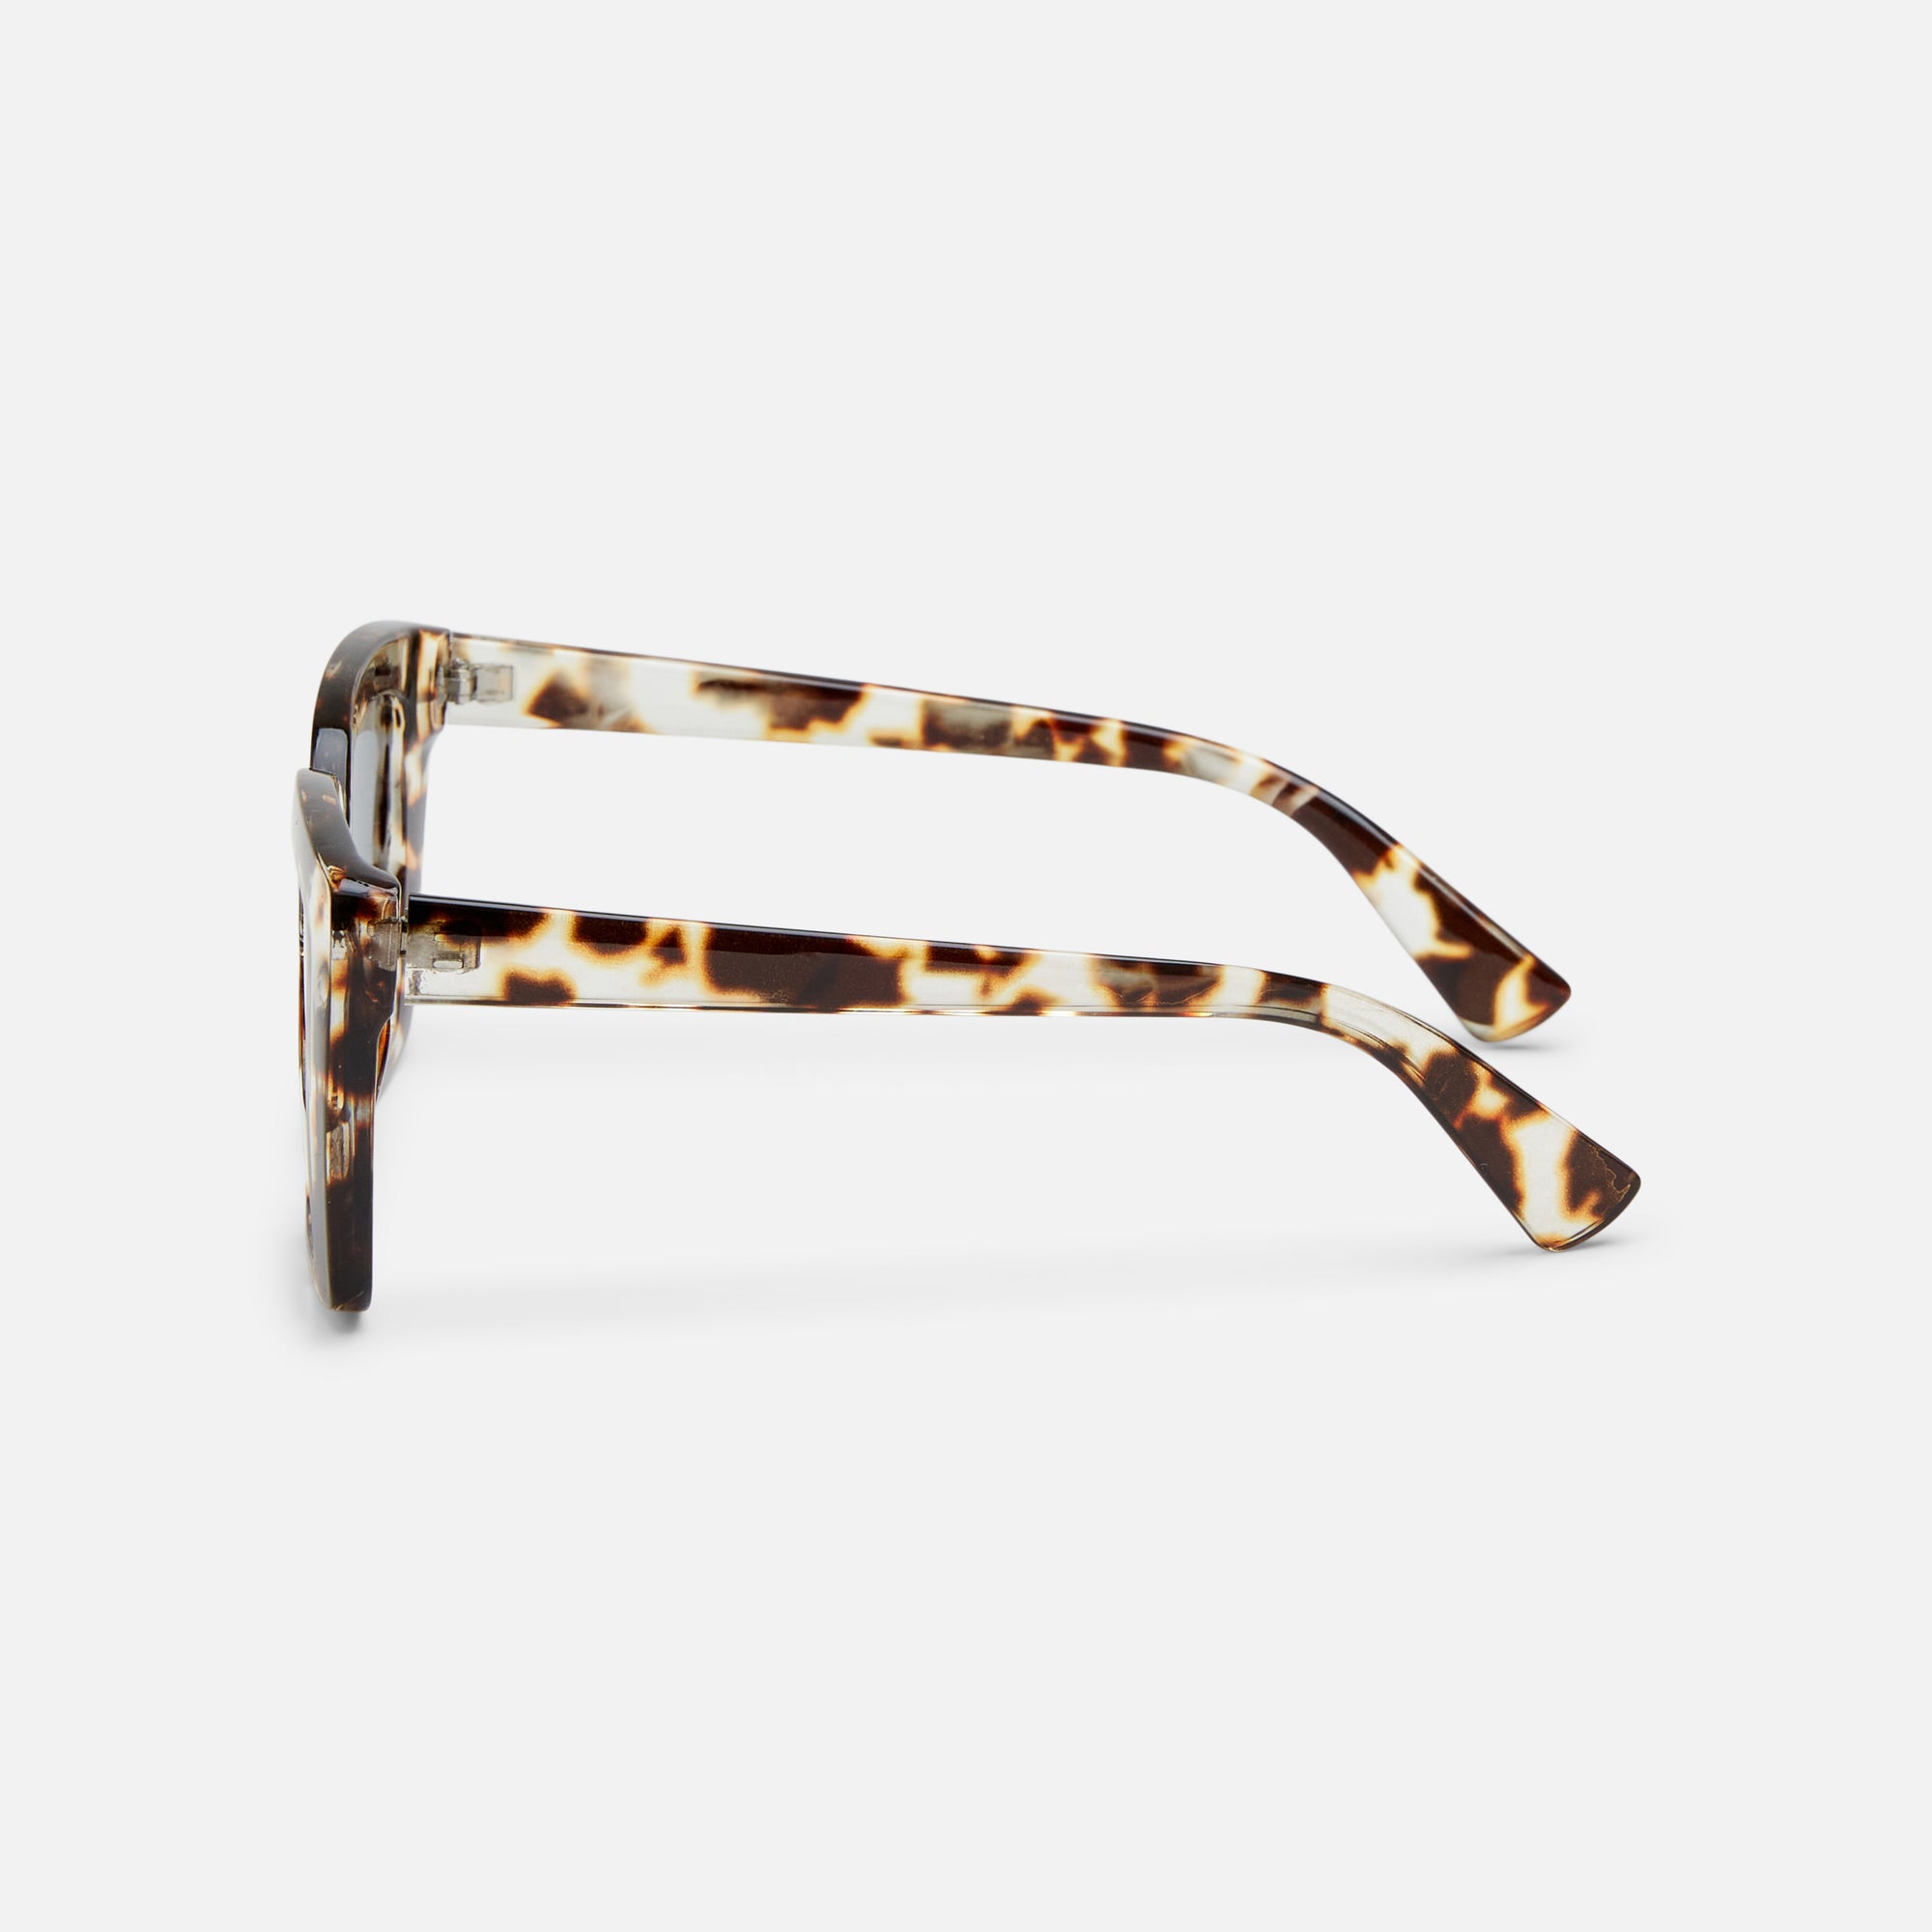 Black square sunglasses with tortoise frame